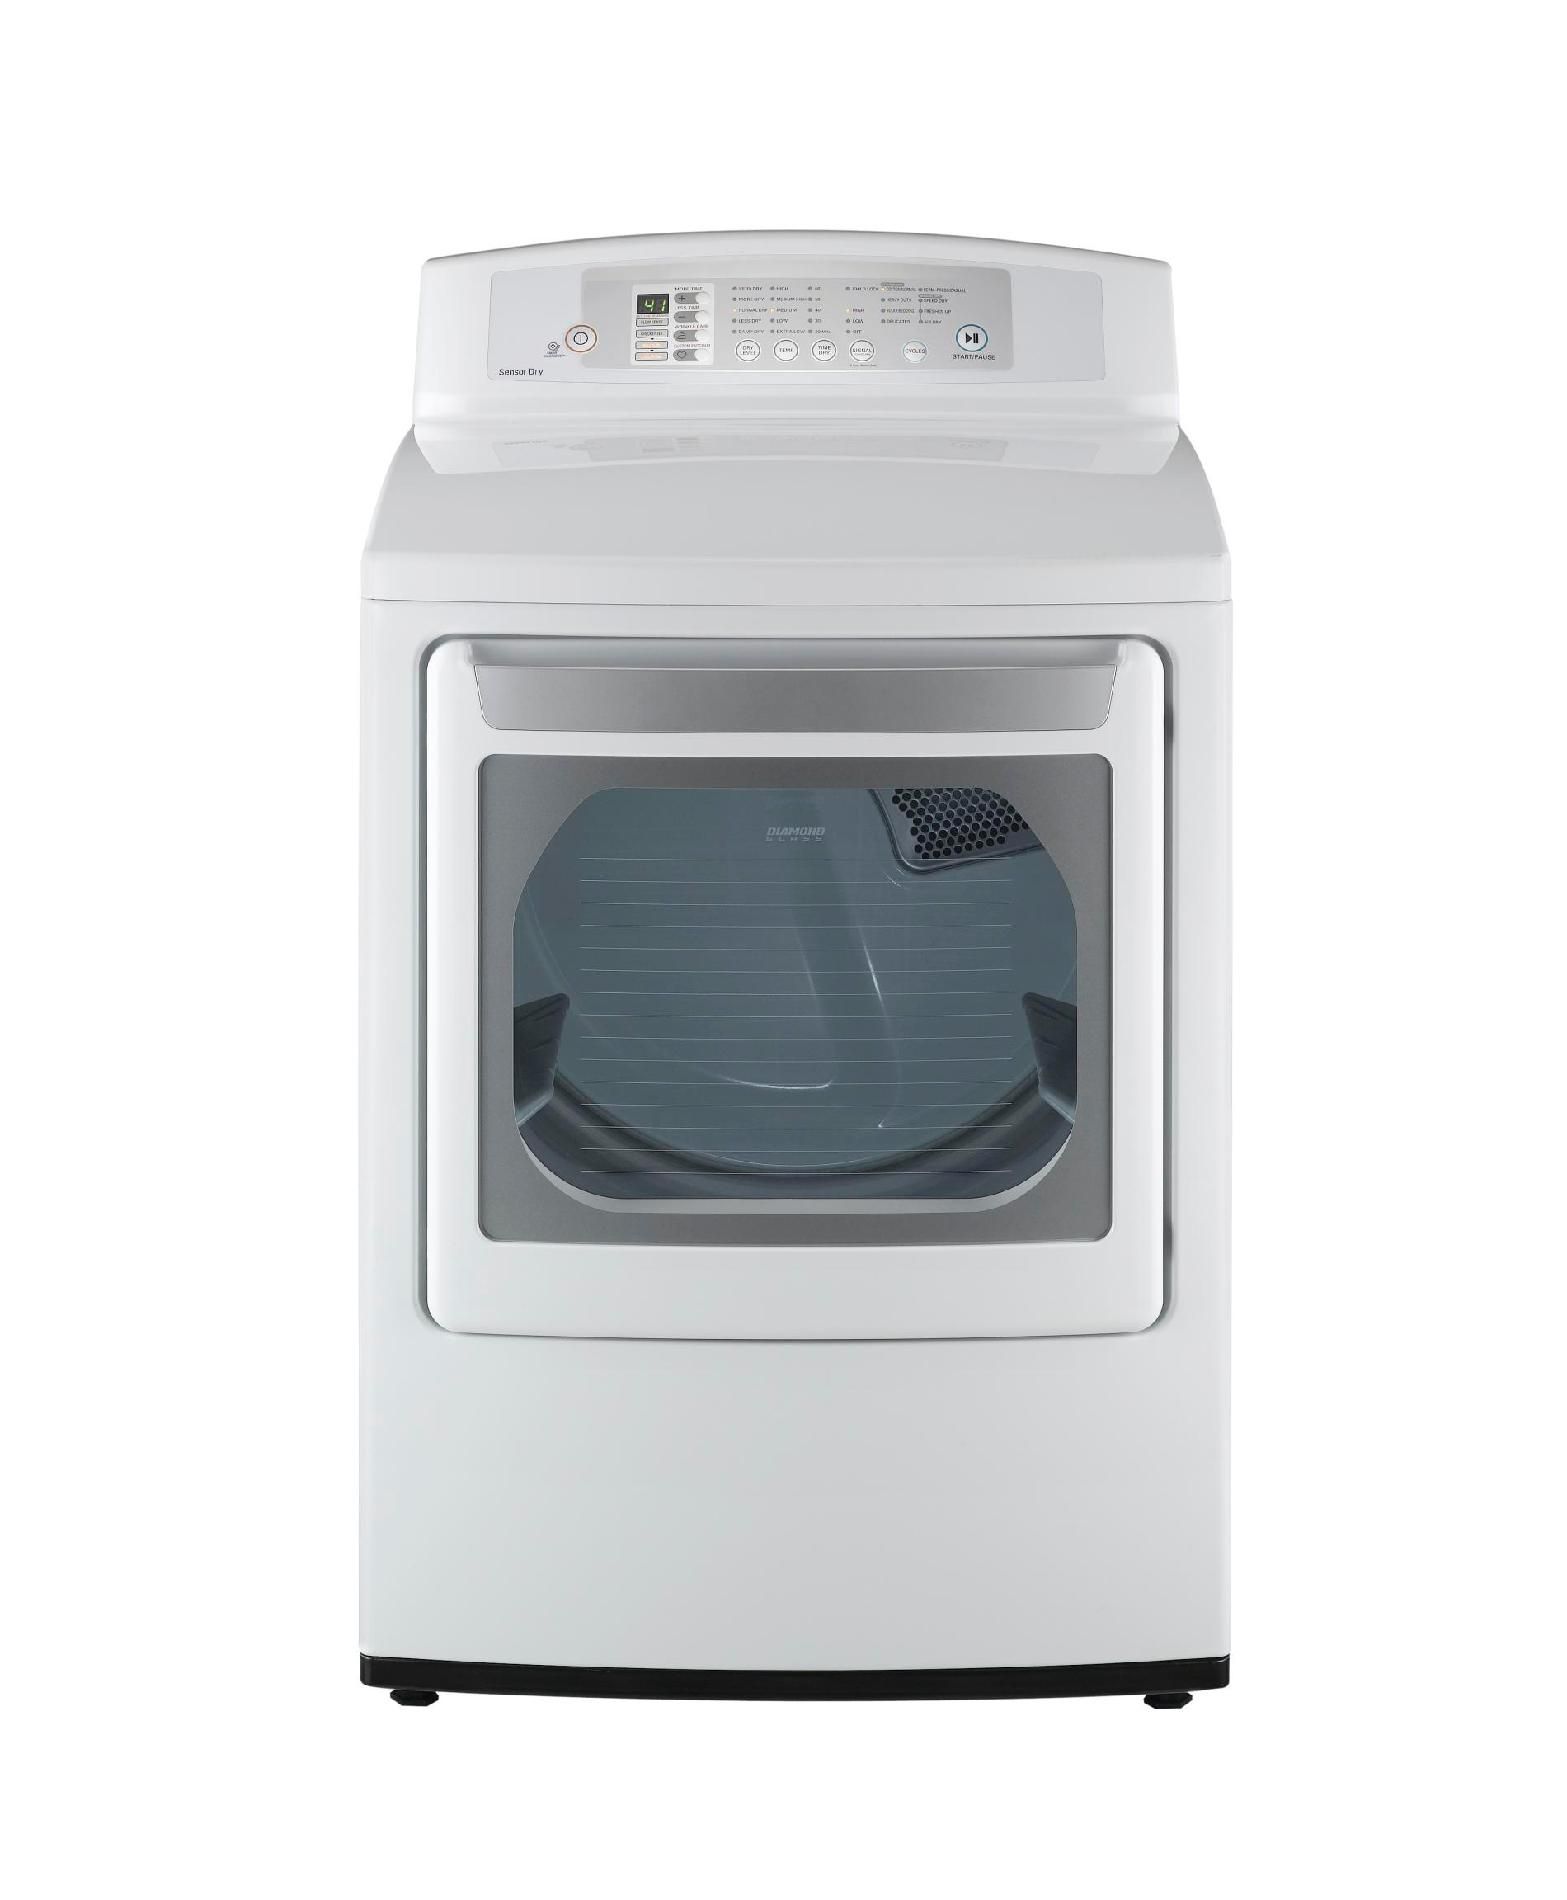 LG 7.1 cu. ft. Gas Dryer - White